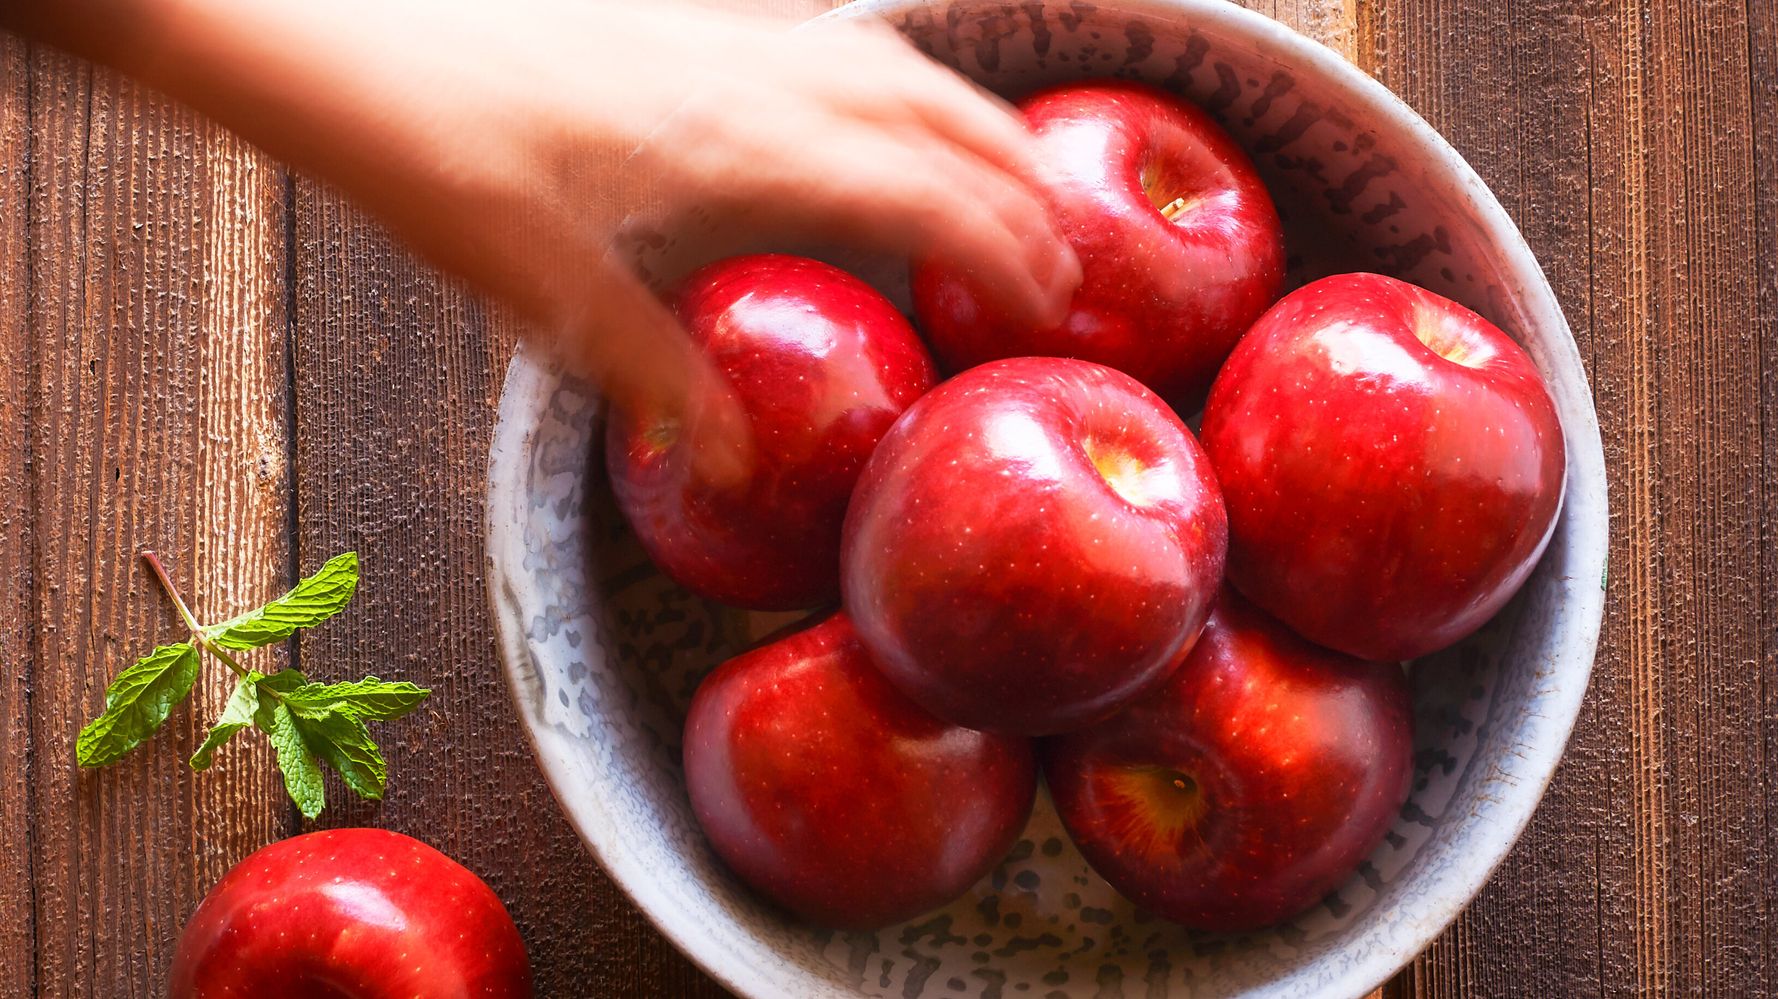 Meet the Cosmic Crisp, Washington's own “perfect apple”